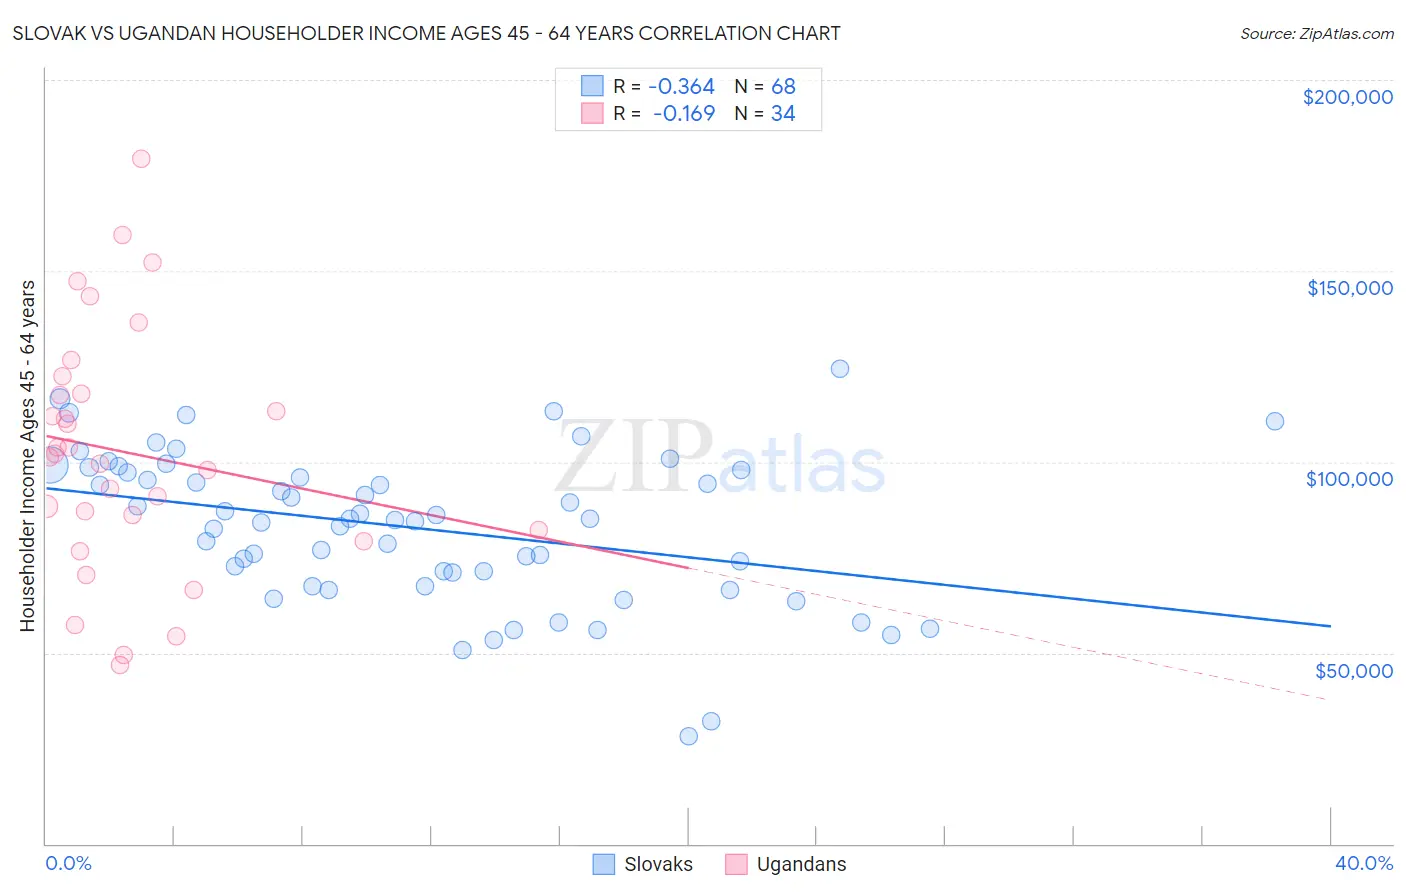 Slovak vs Ugandan Householder Income Ages 45 - 64 years